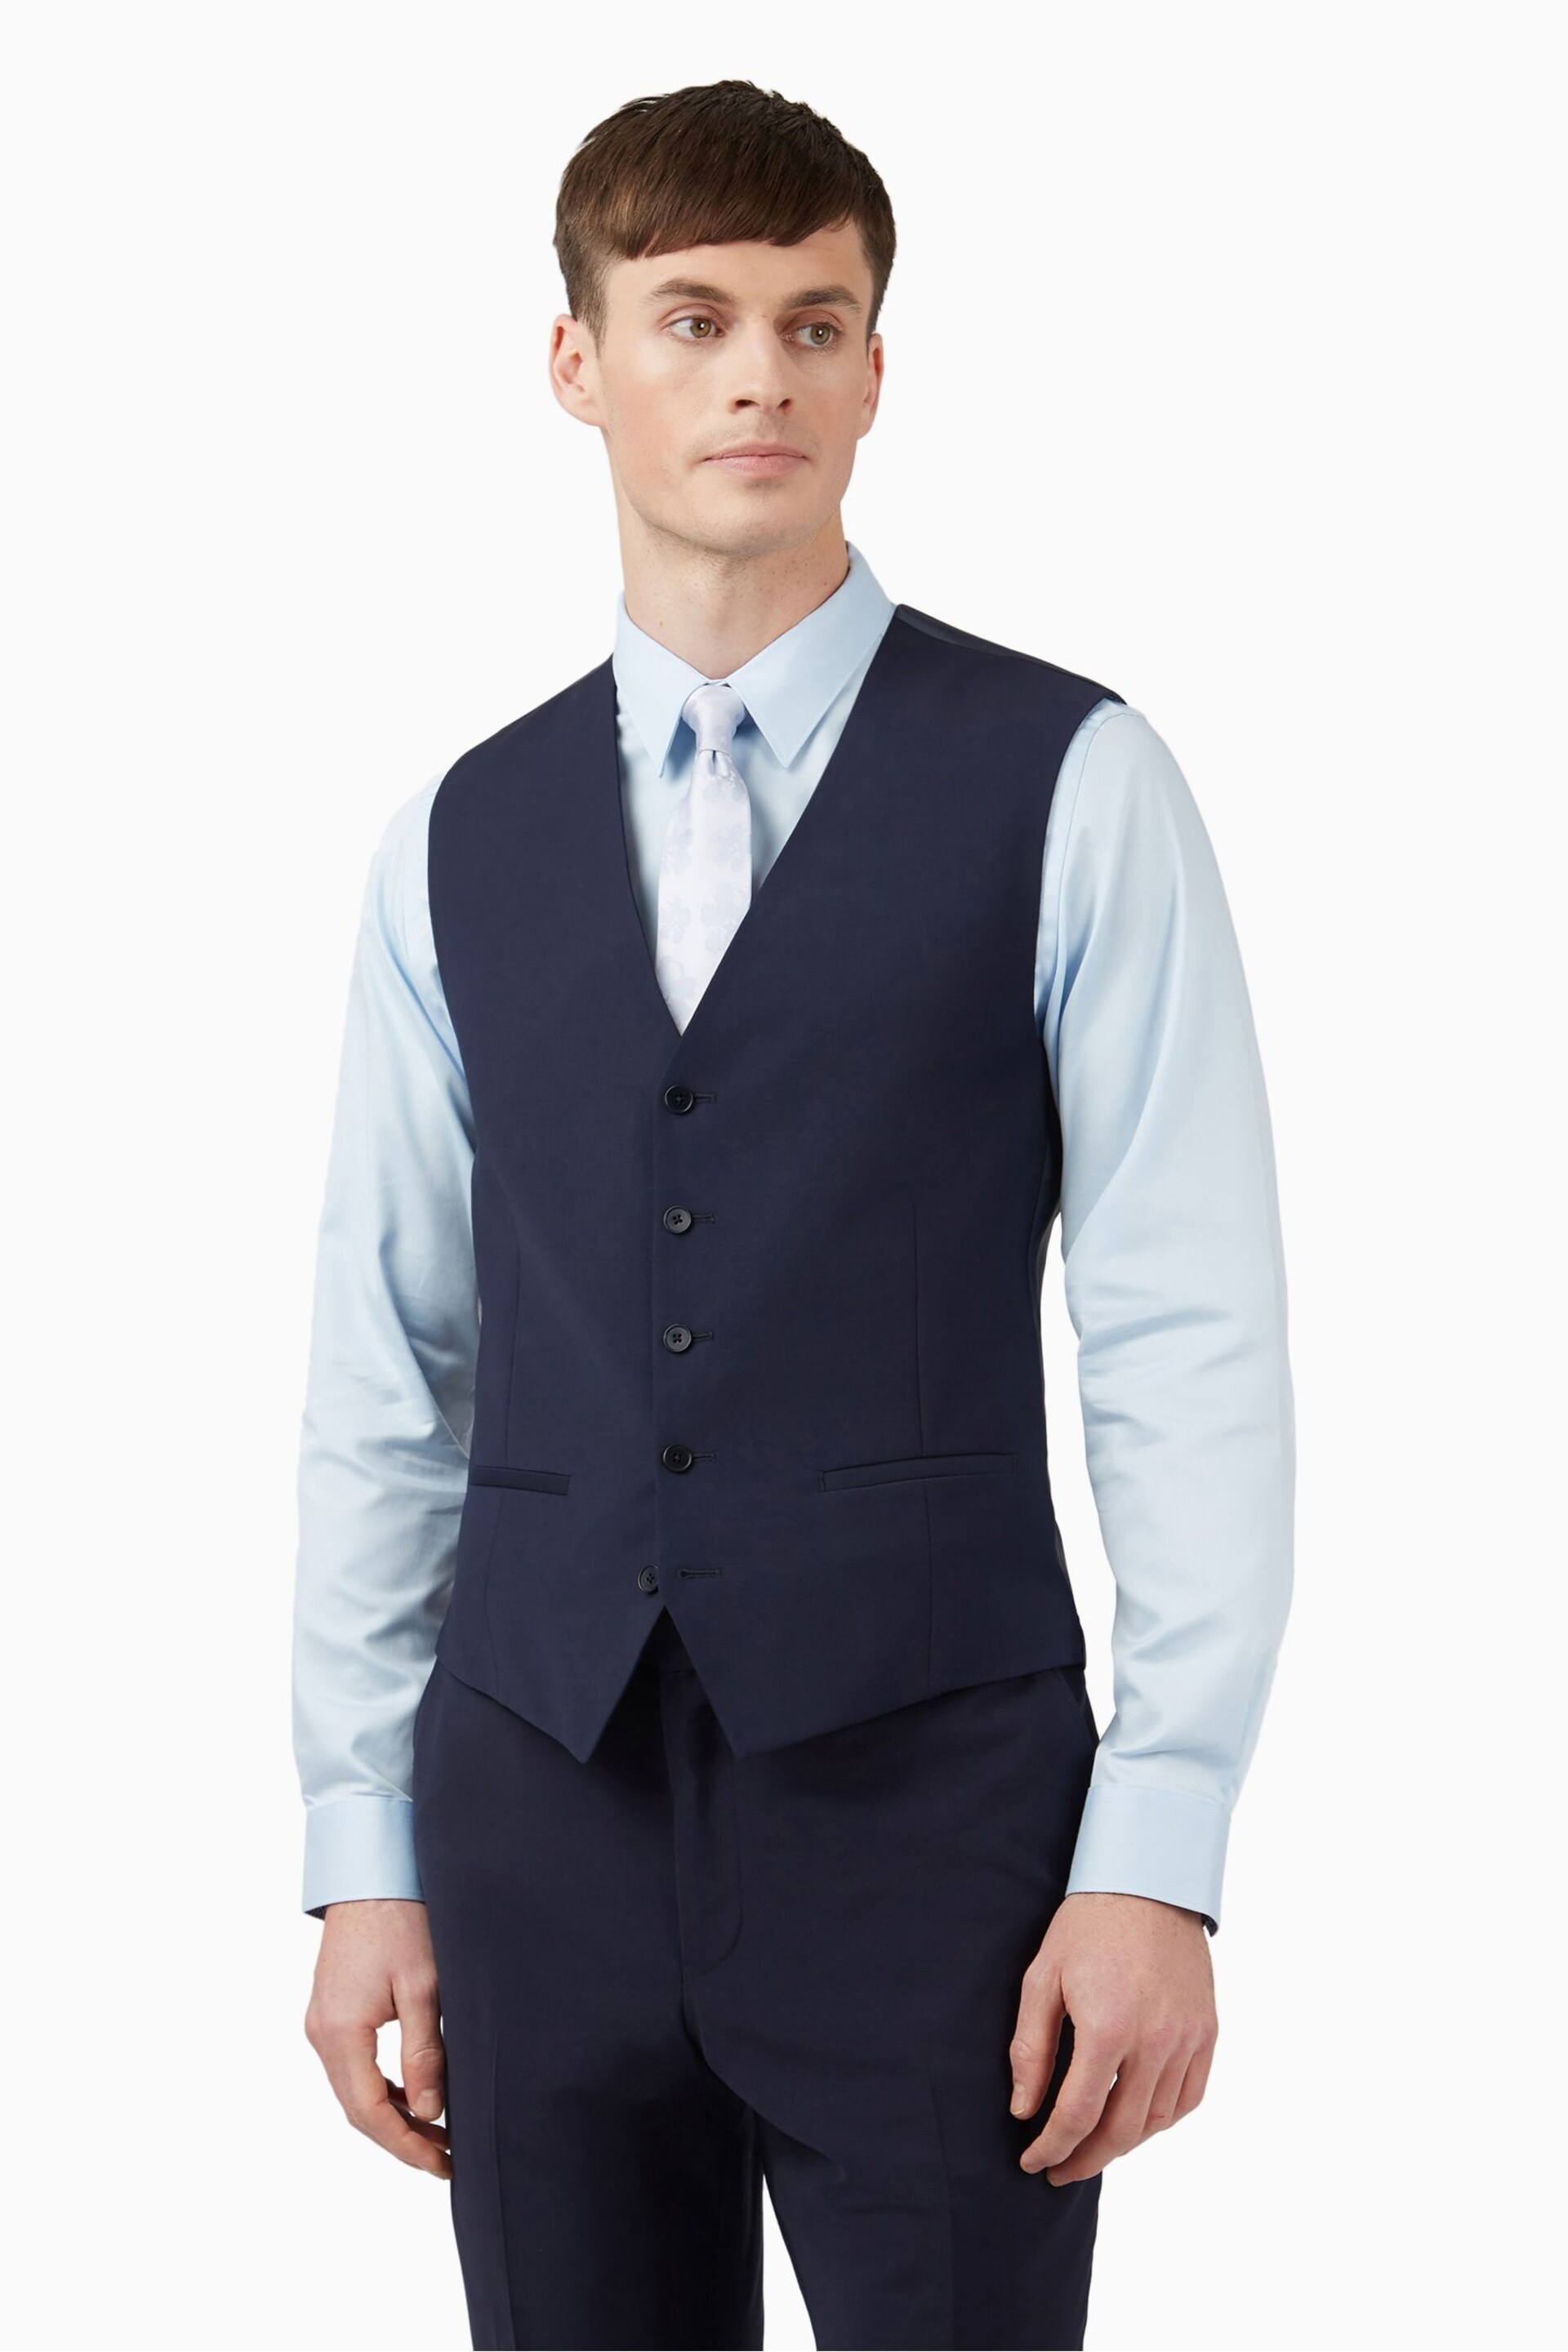 Ted Baker Navy Blue Premium Panama Suit Waistcoat - Image 1 of 4